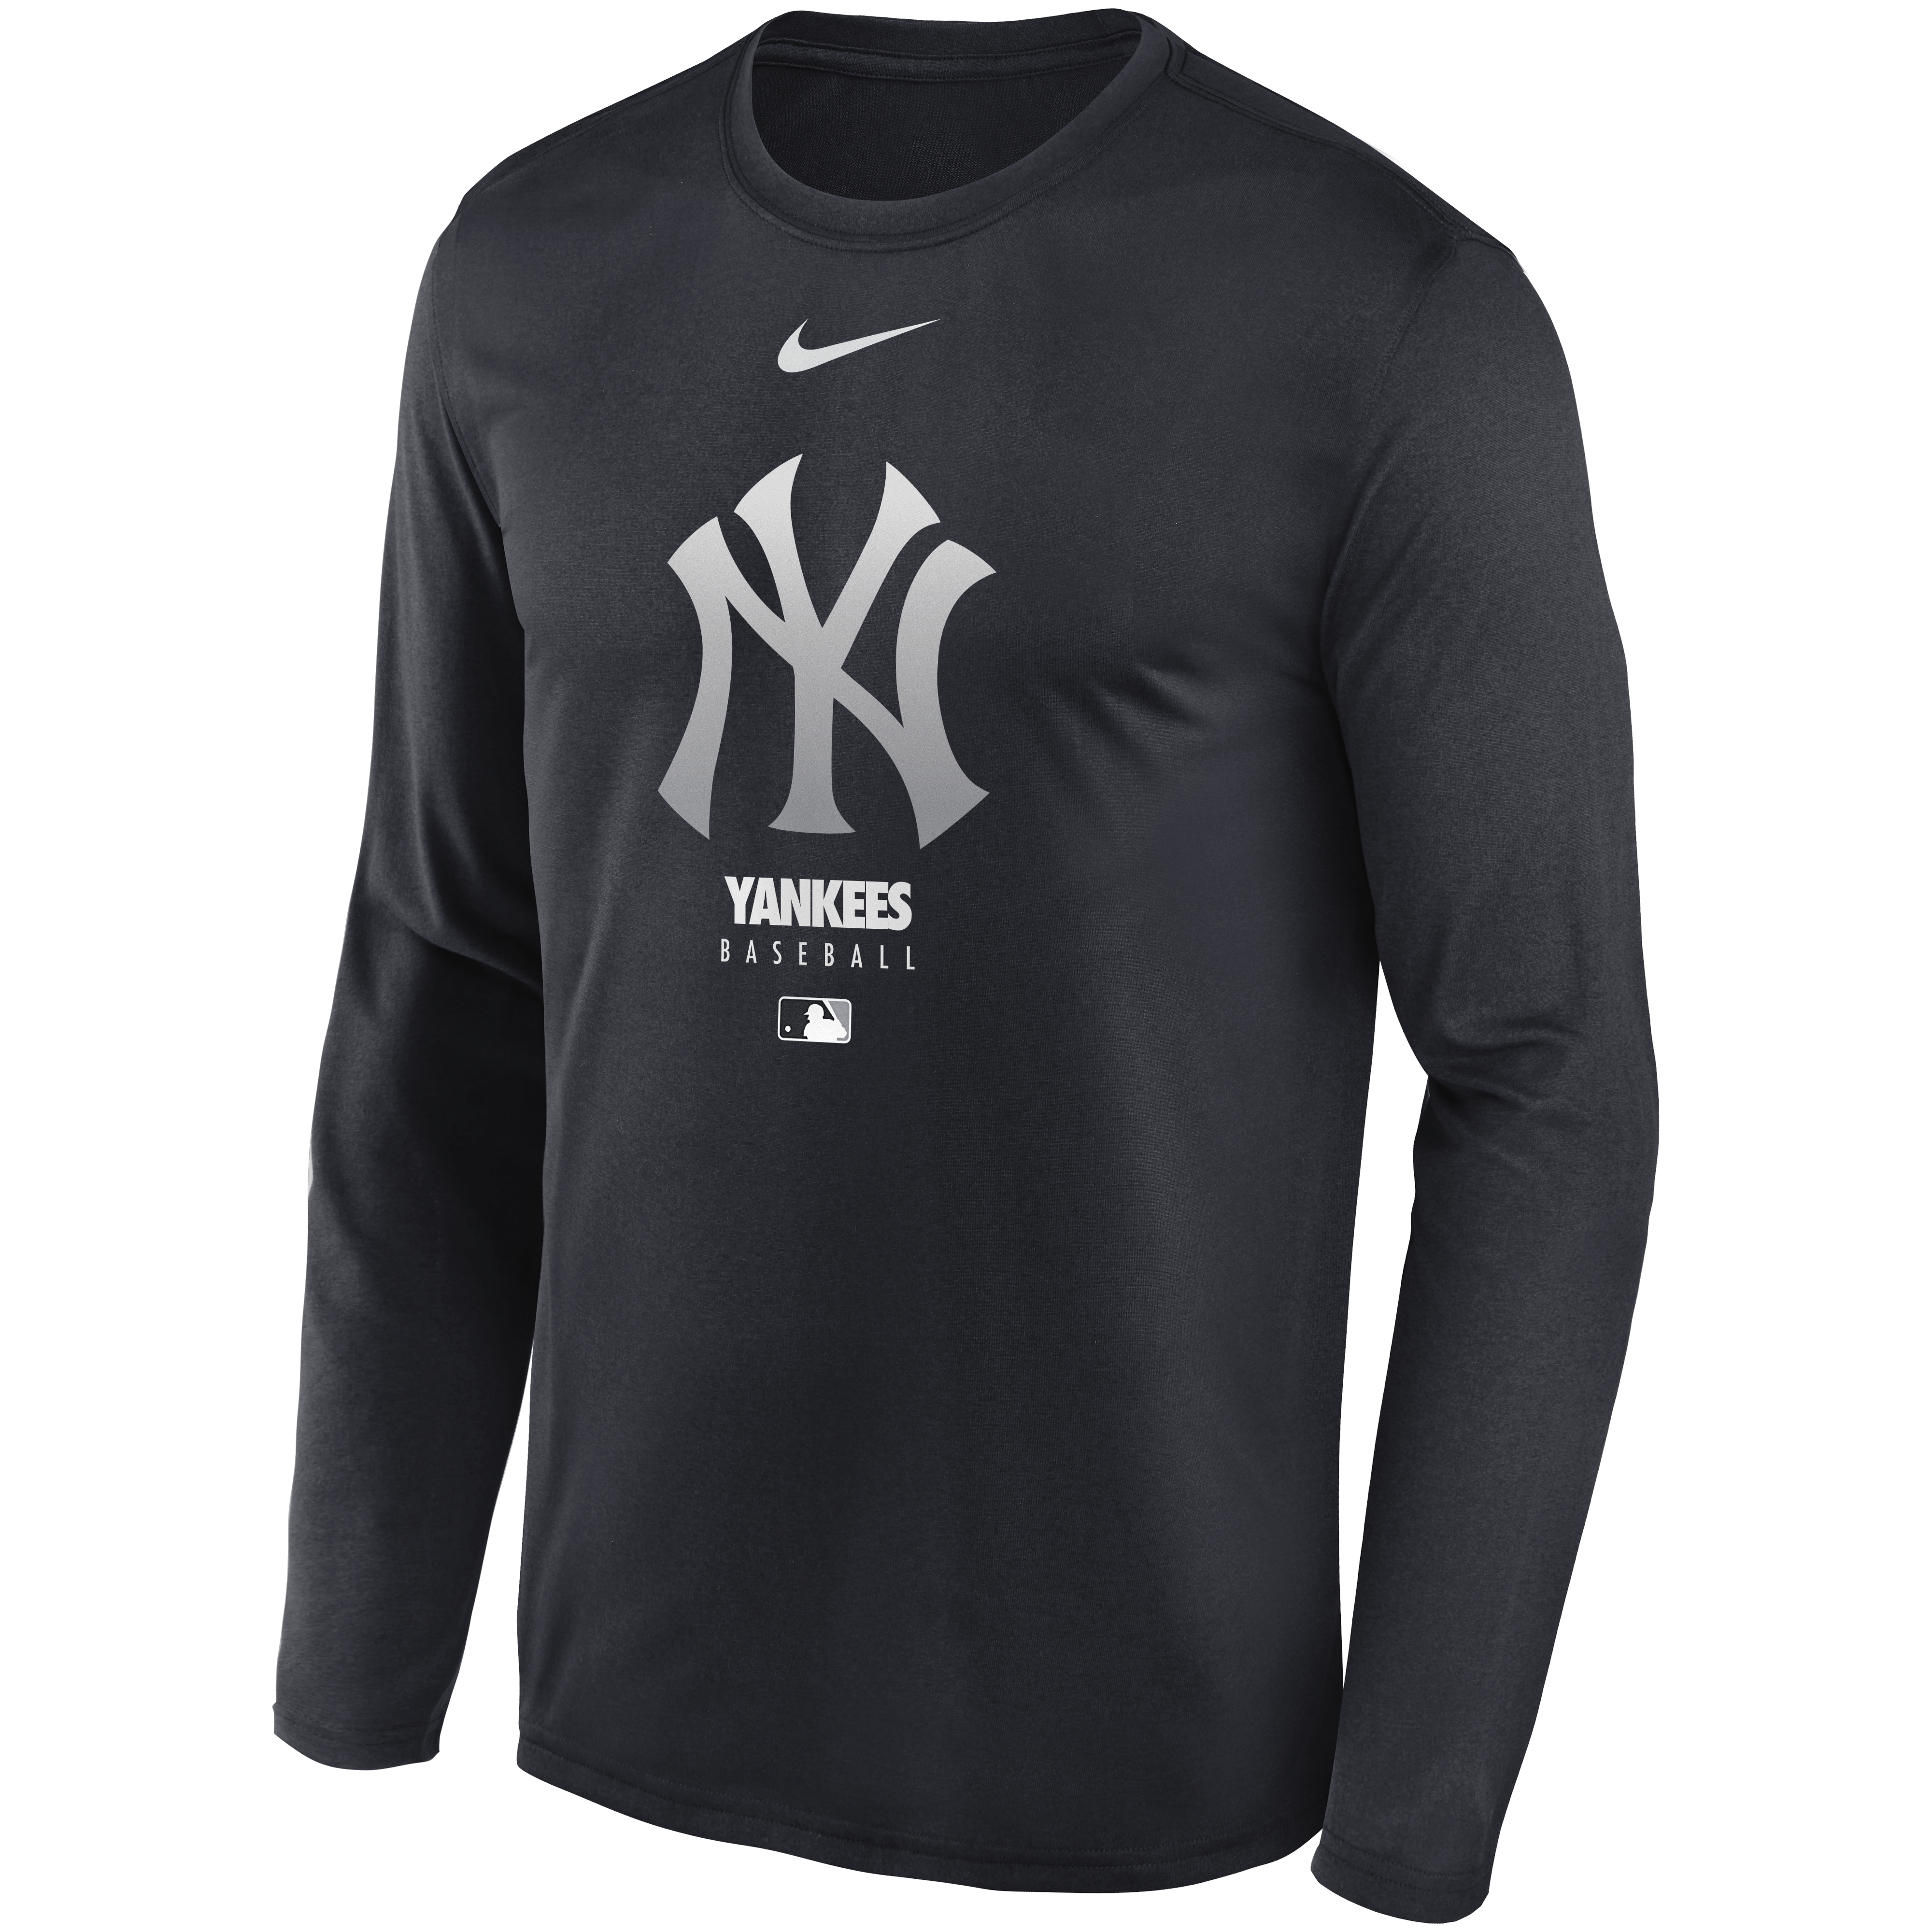 KTZ Yankee Stadium Printed Cotton T-shirt in Black for Men